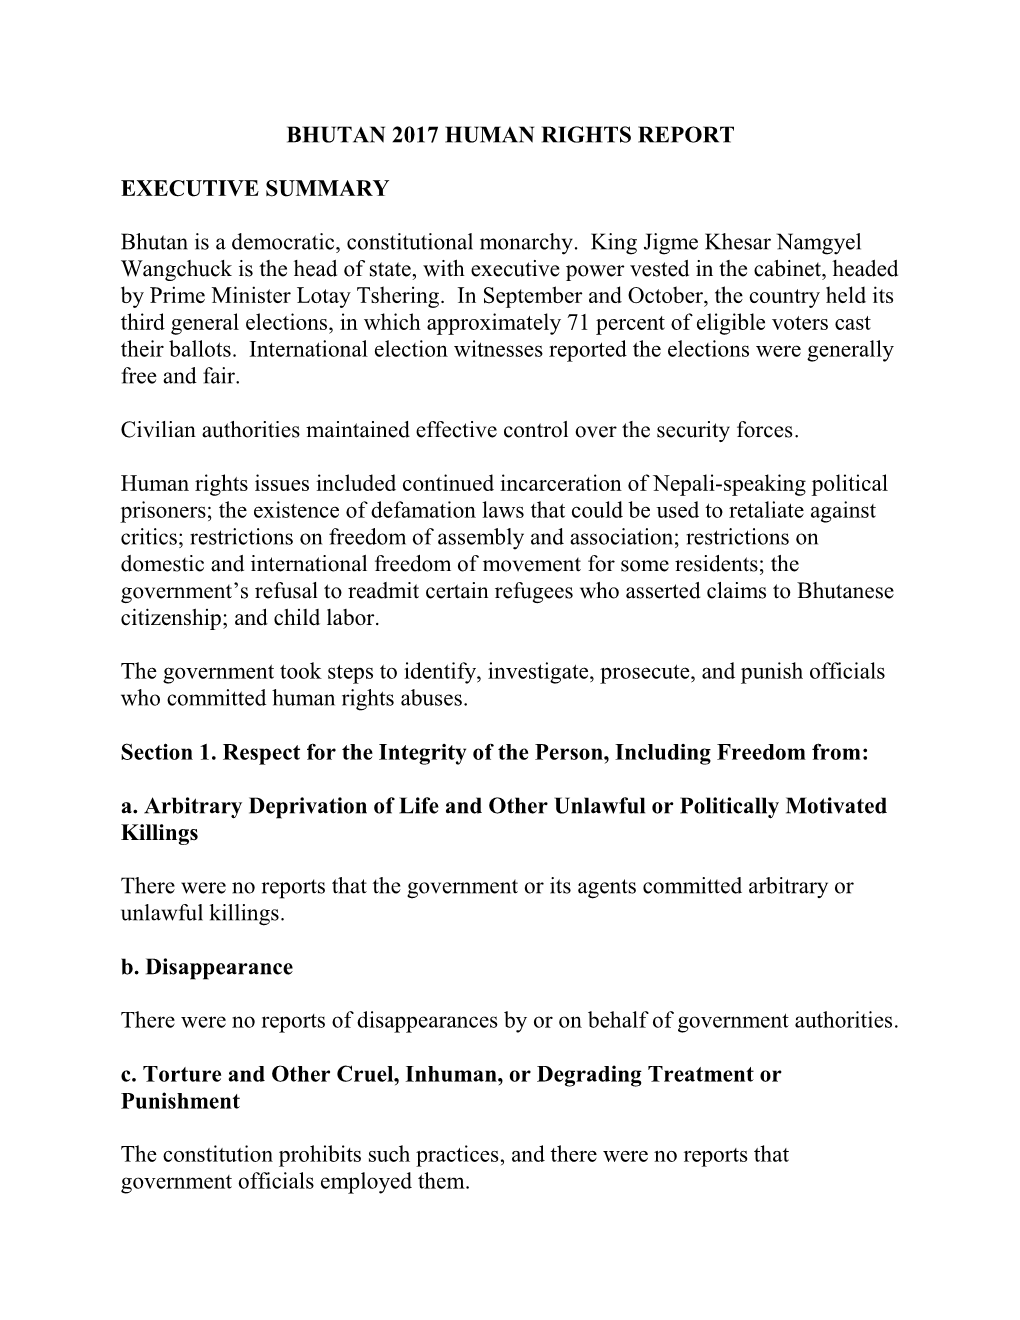 Bhutan 2018 Human Rights Report